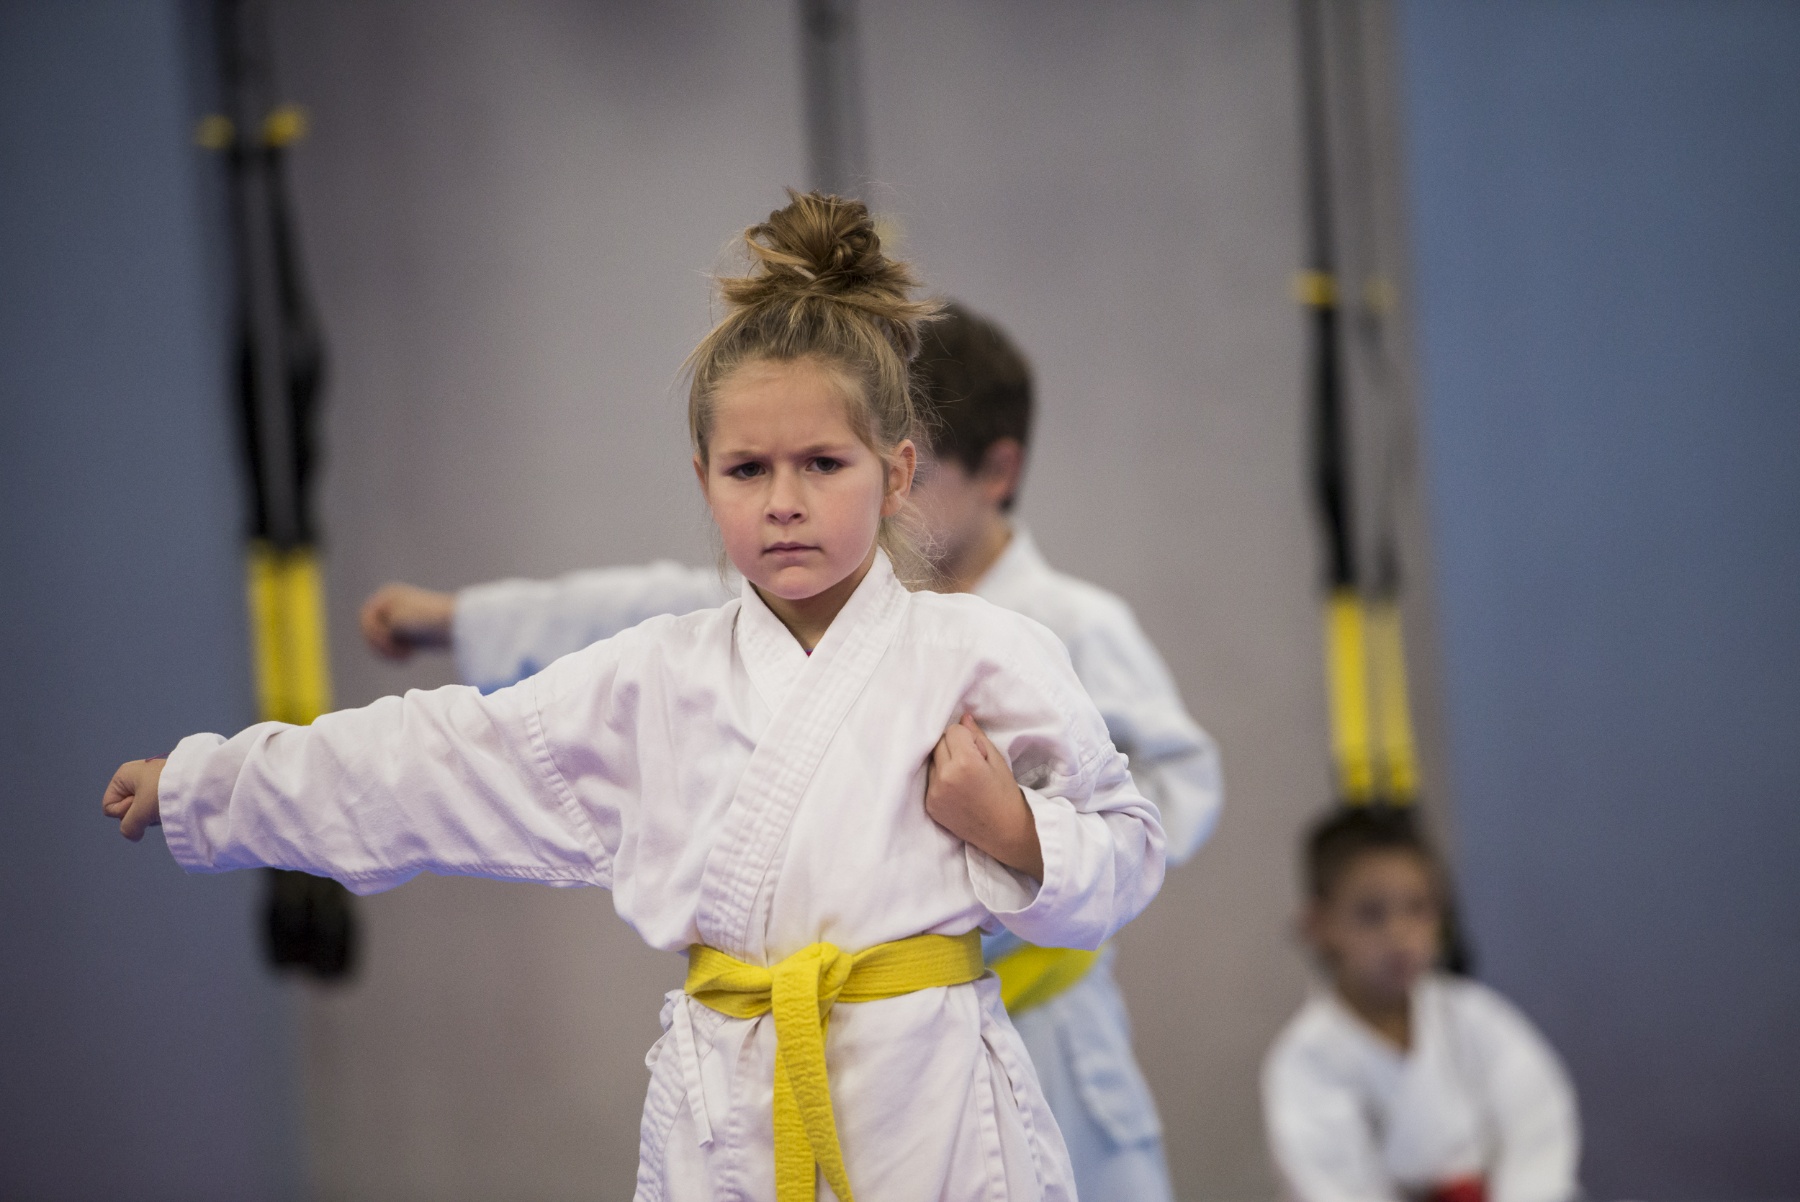 athens-training-hall-amilla-karate-sportshunter-4